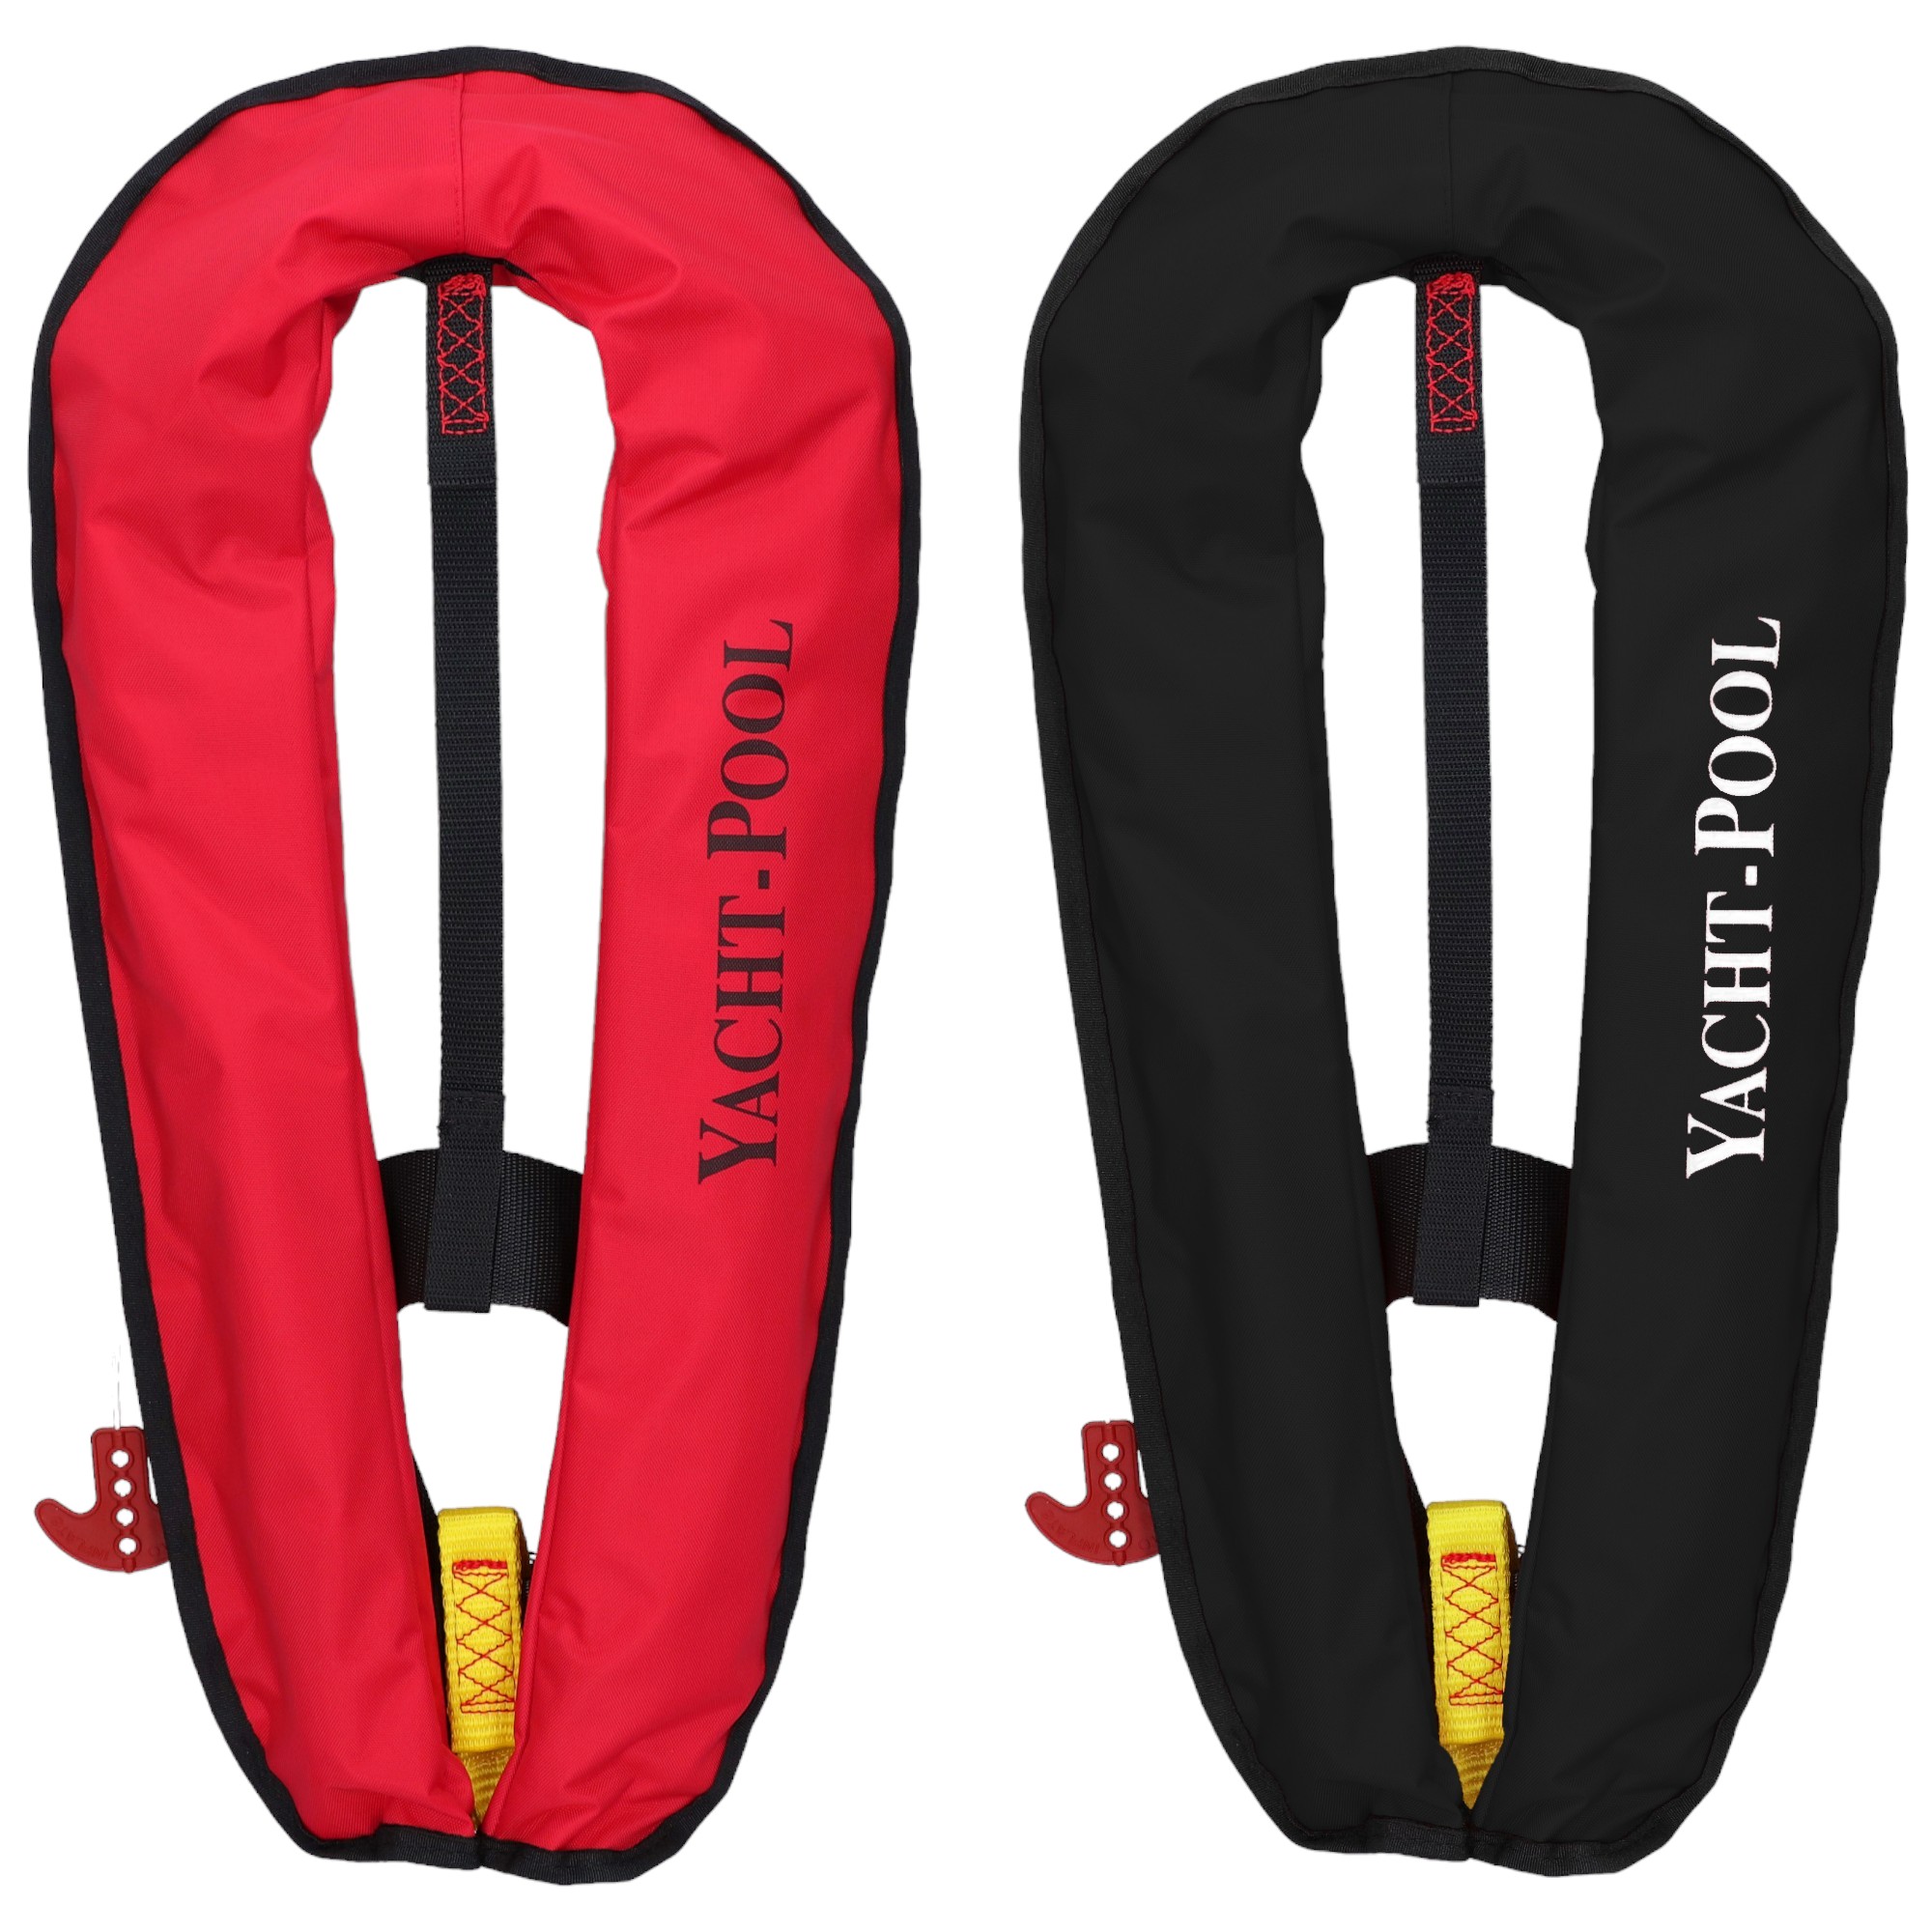 YACHT-POOL fully automatic life jacket 170 N